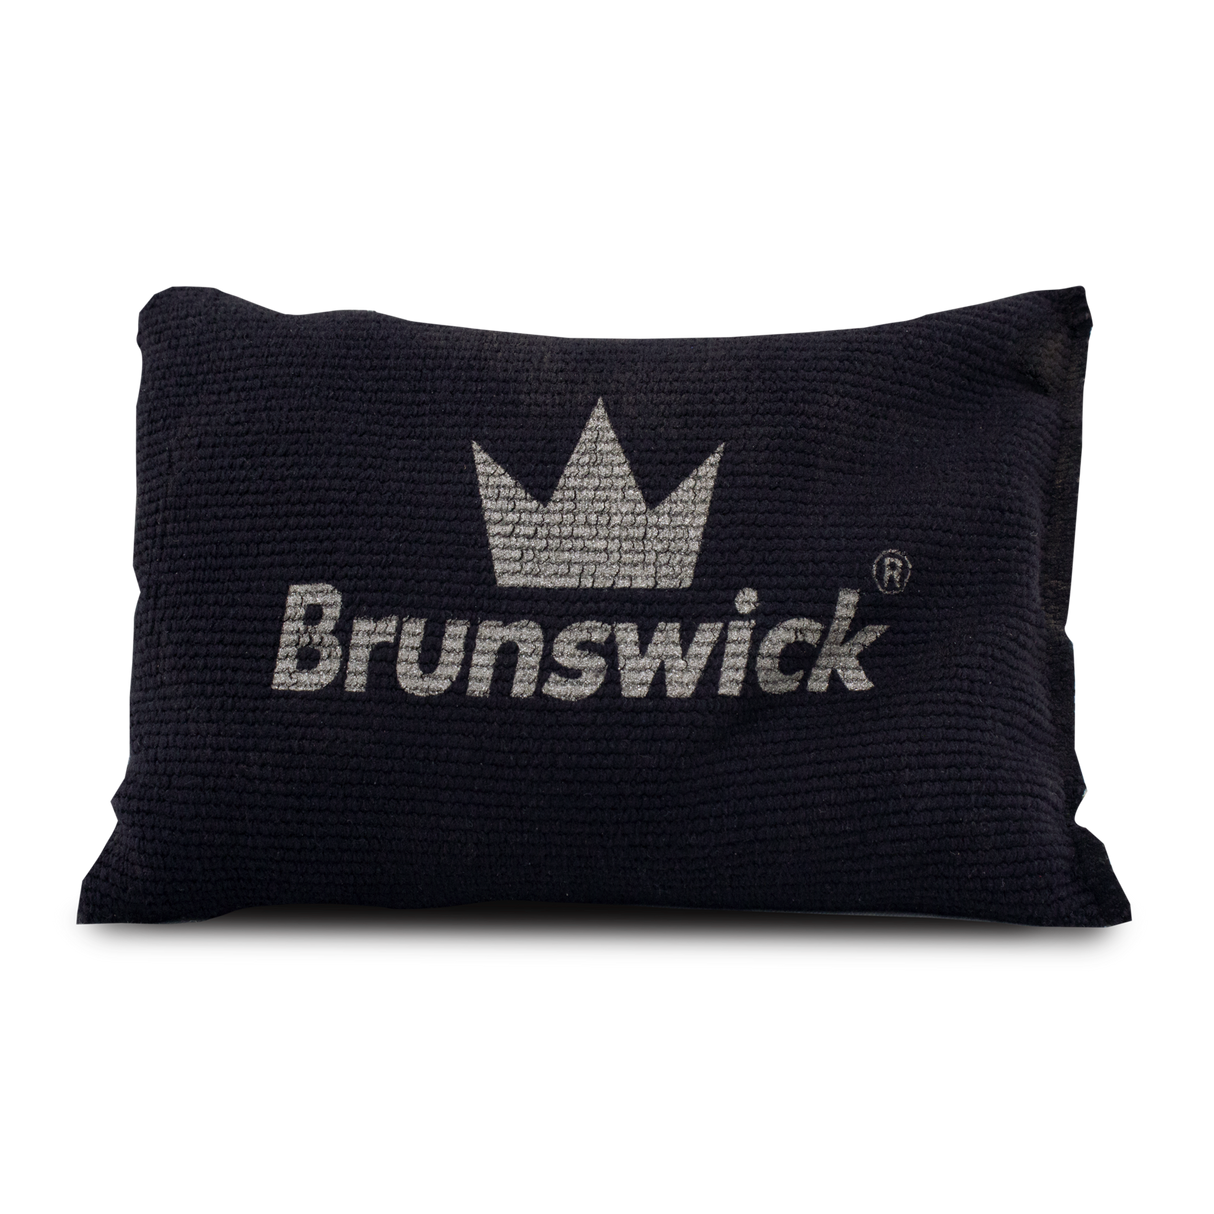 Brunswick Extra Large Grip Sack